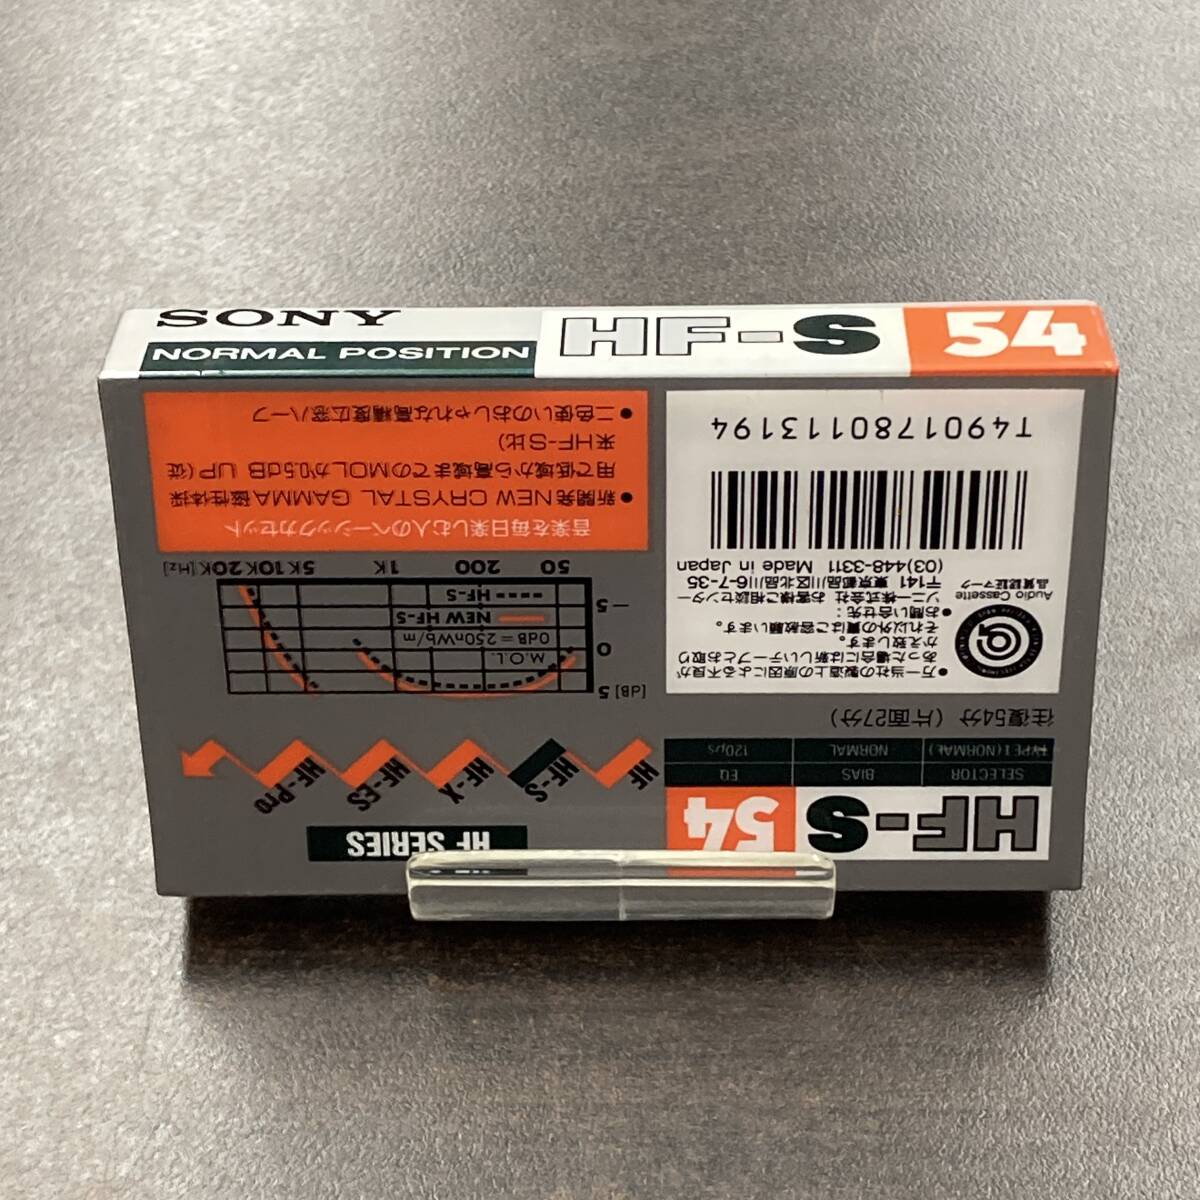 2048N 未使用 ソニー HF-S 54分 ノーマル 1本 カセットテープ/One SONY Type I Normal Position unused Audio Cassette_画像2